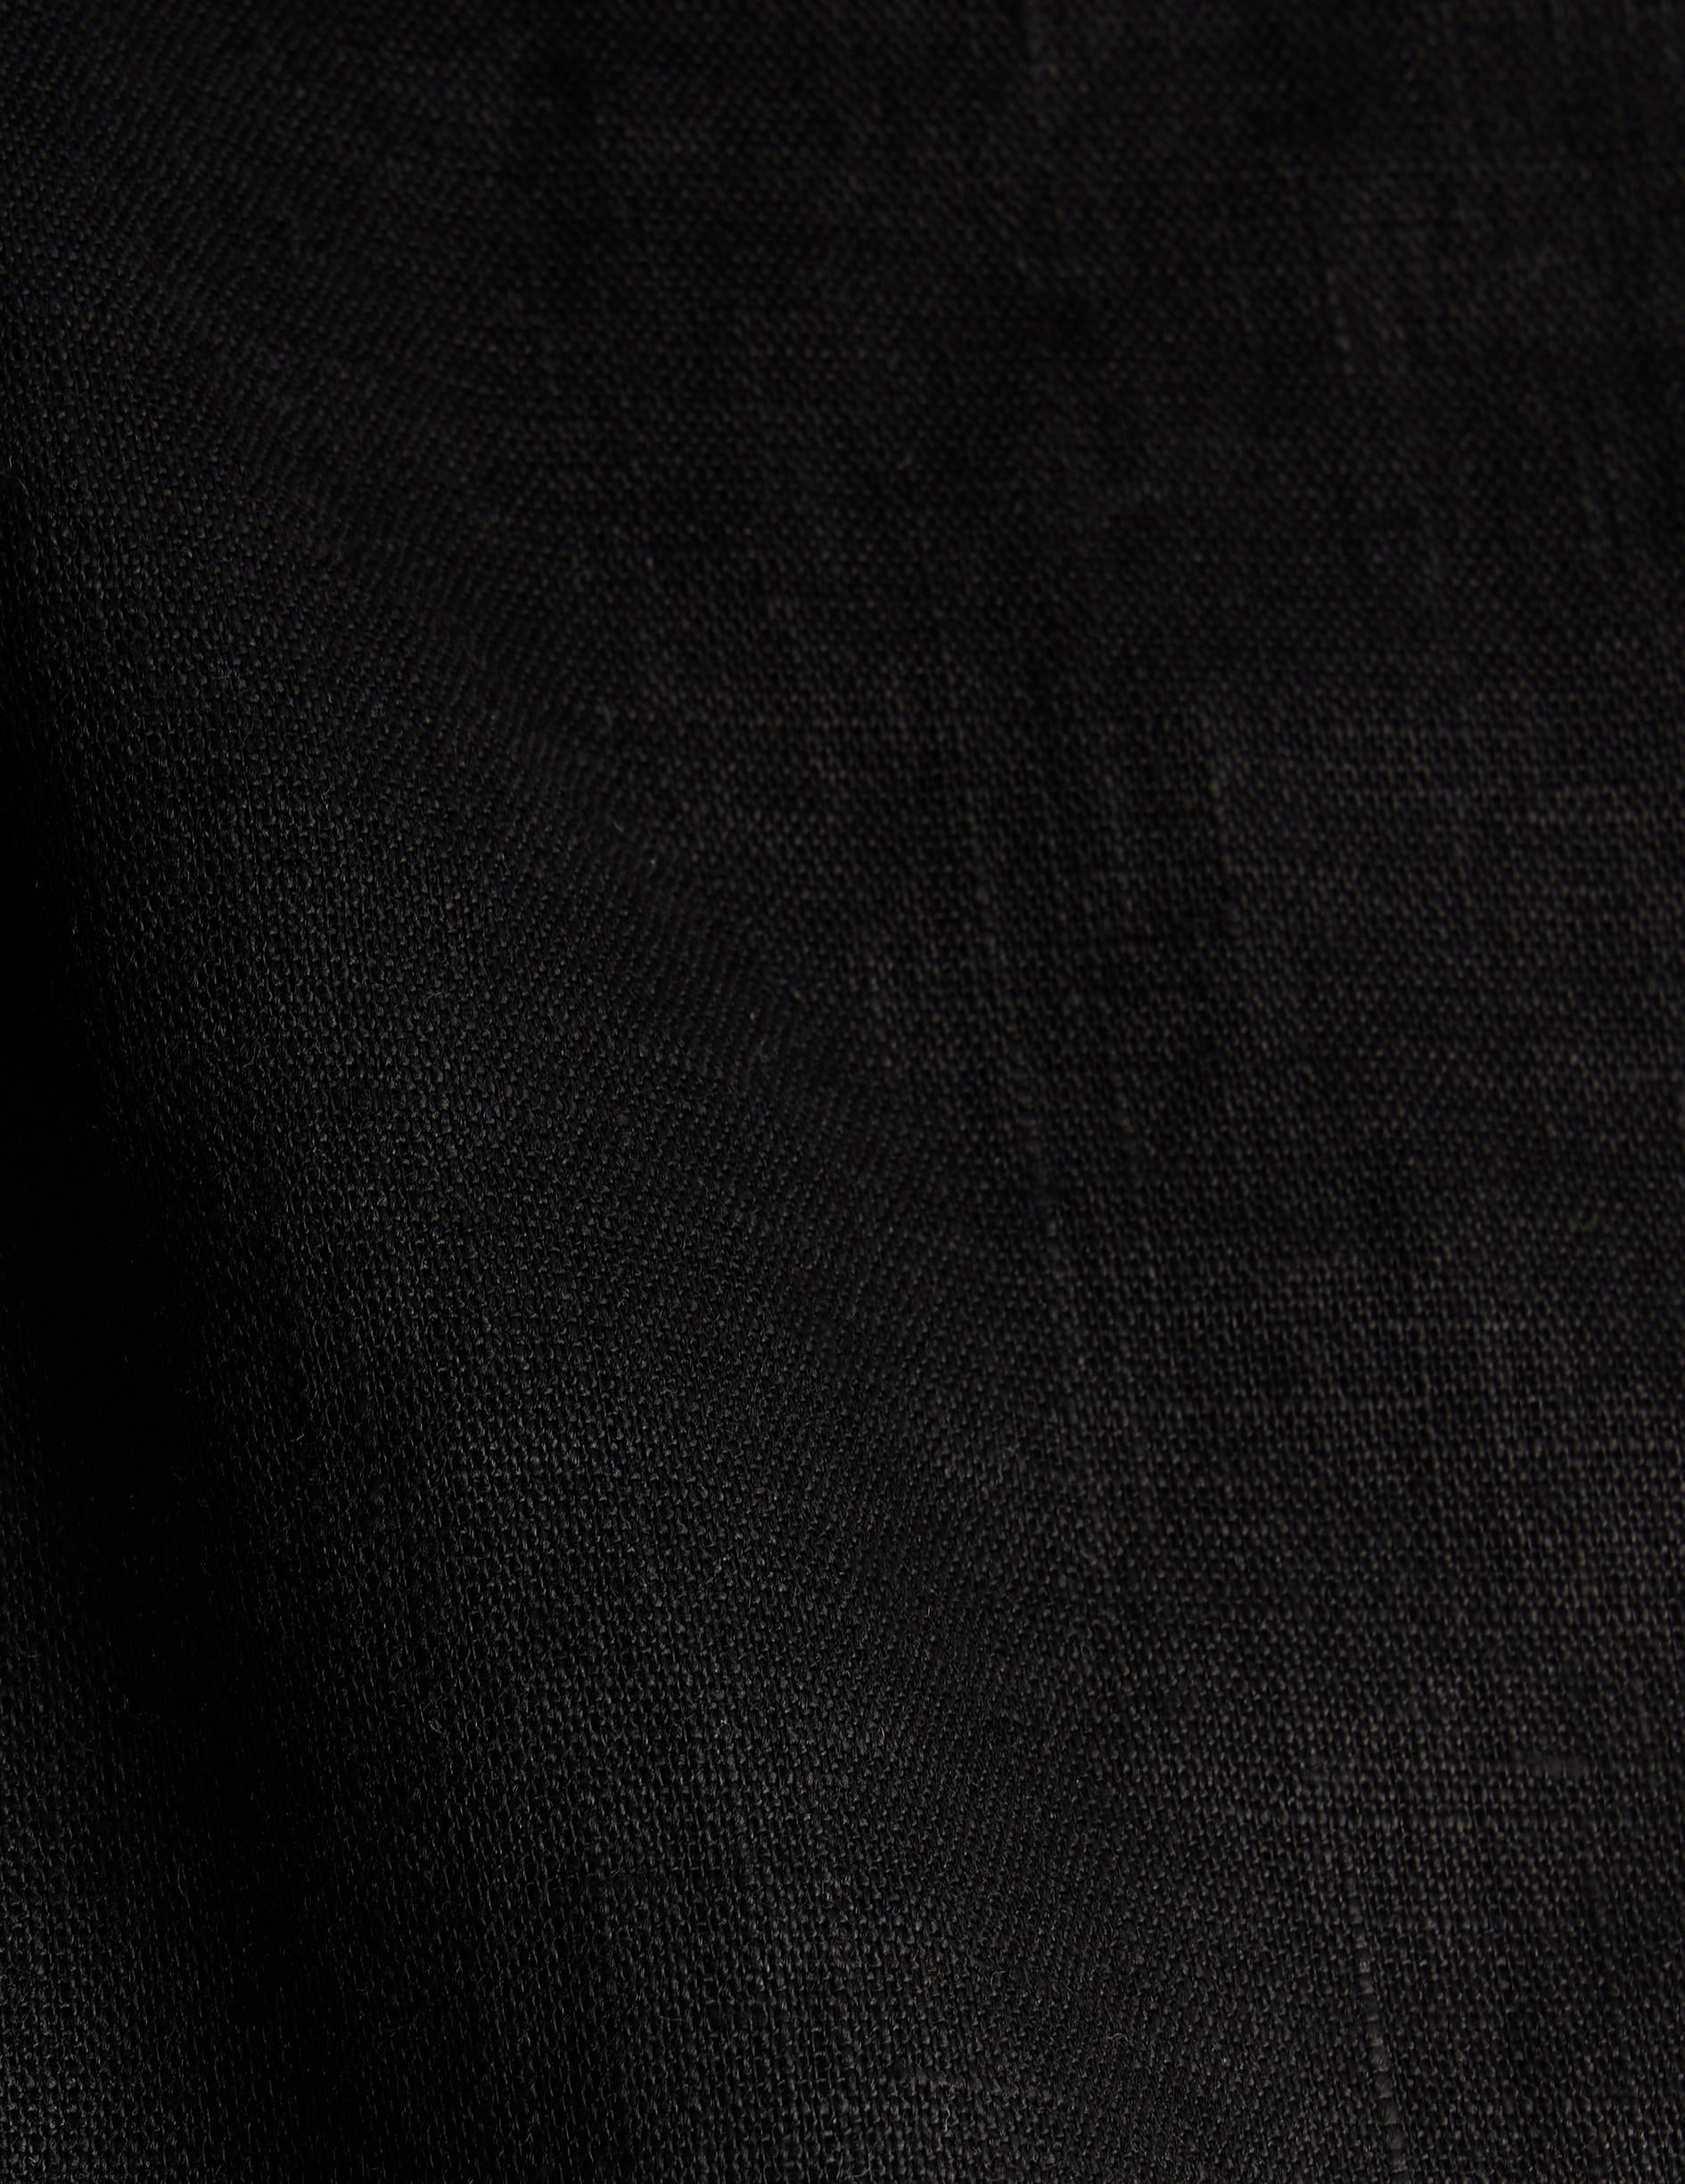 Hilario shirt in black linen - Linen - Officer Collar